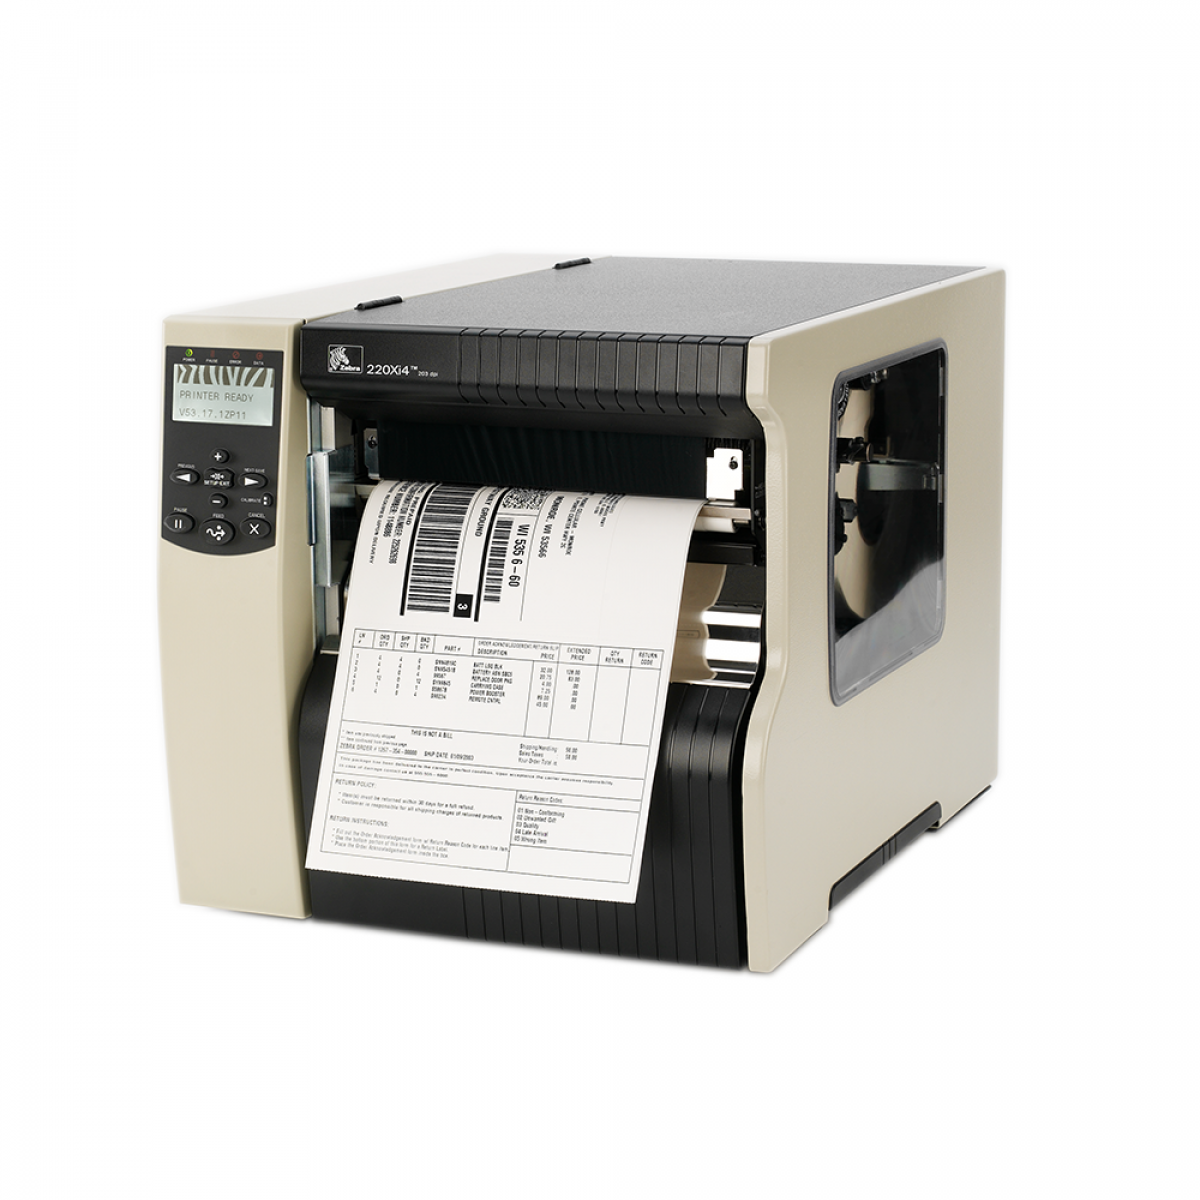 Zebra 220xi4 high performance industrial printer